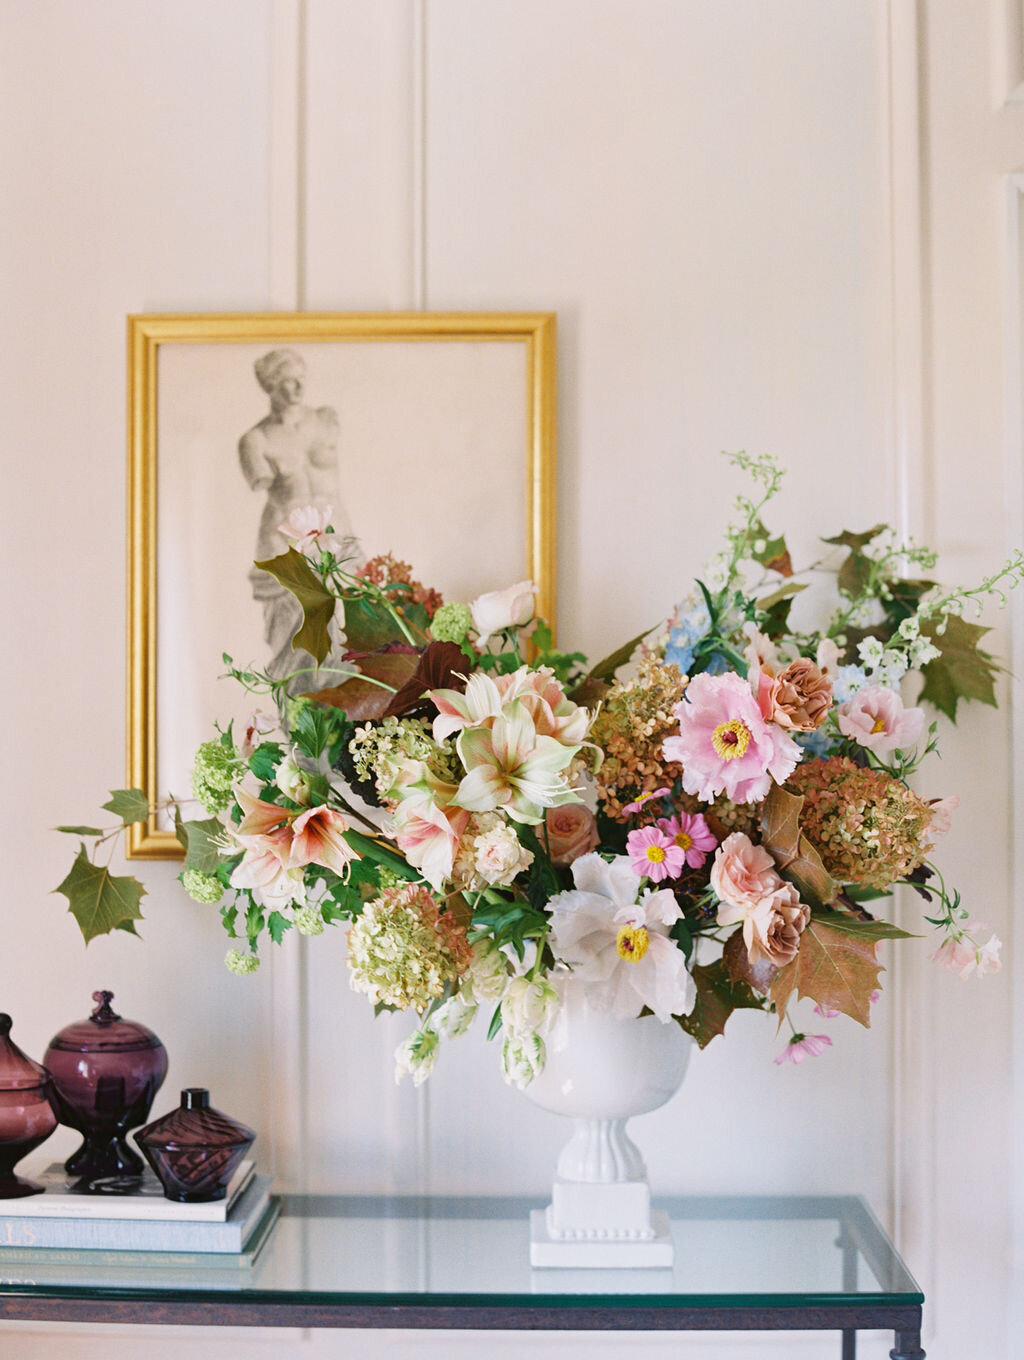 max-owens-design-at-home-floral-arrangements-08-entryway-flowers